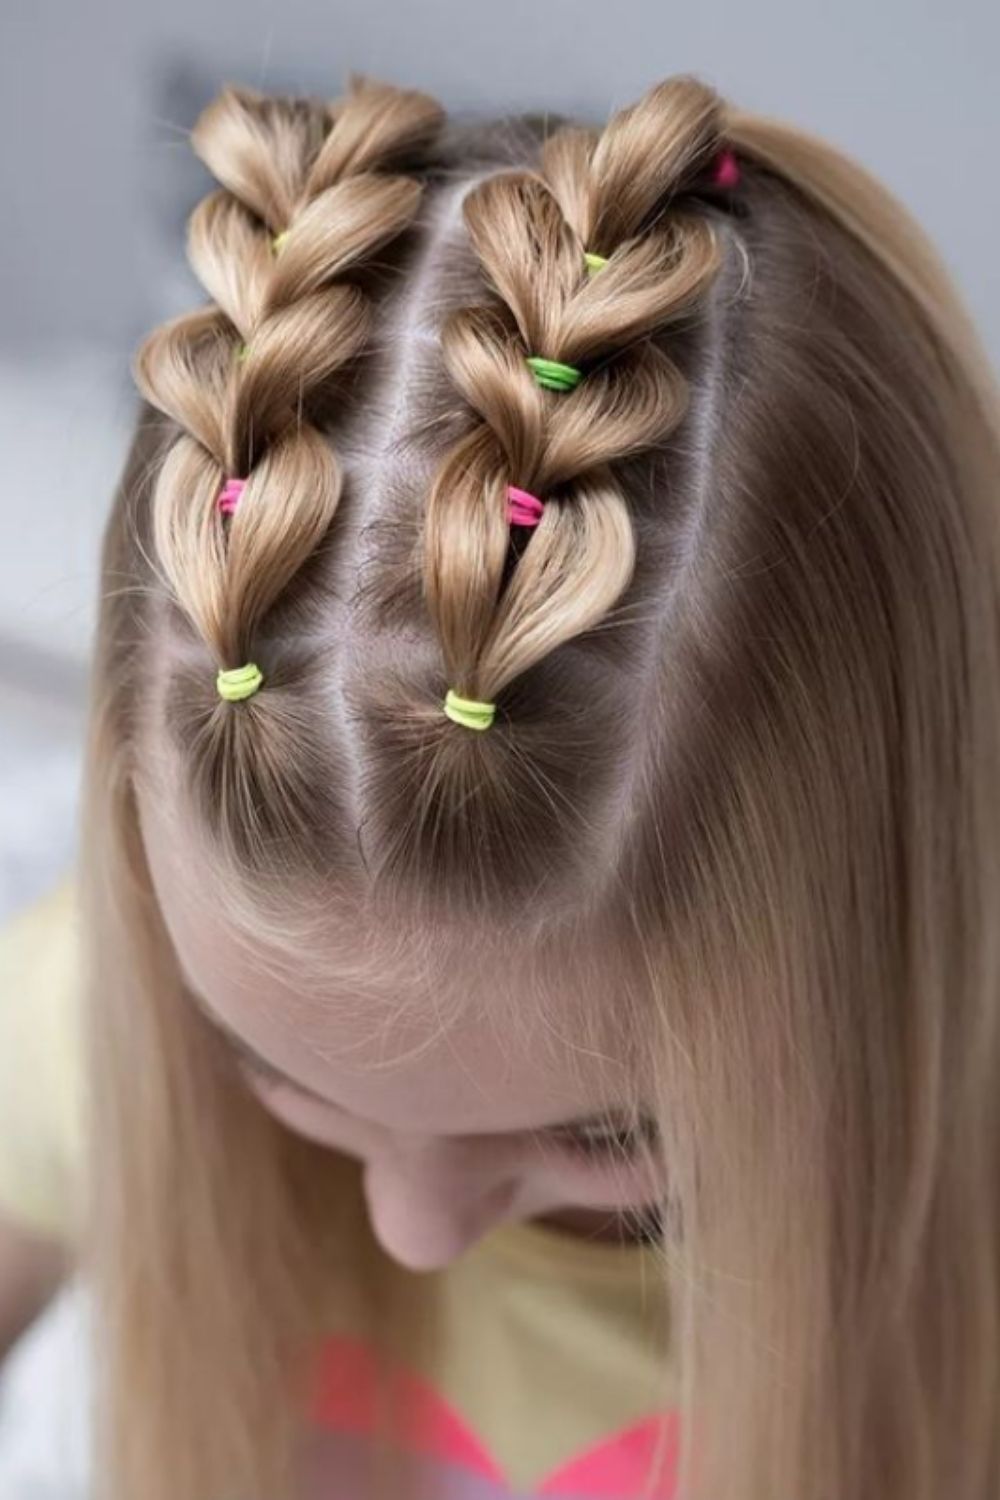 Hair top double braid idea